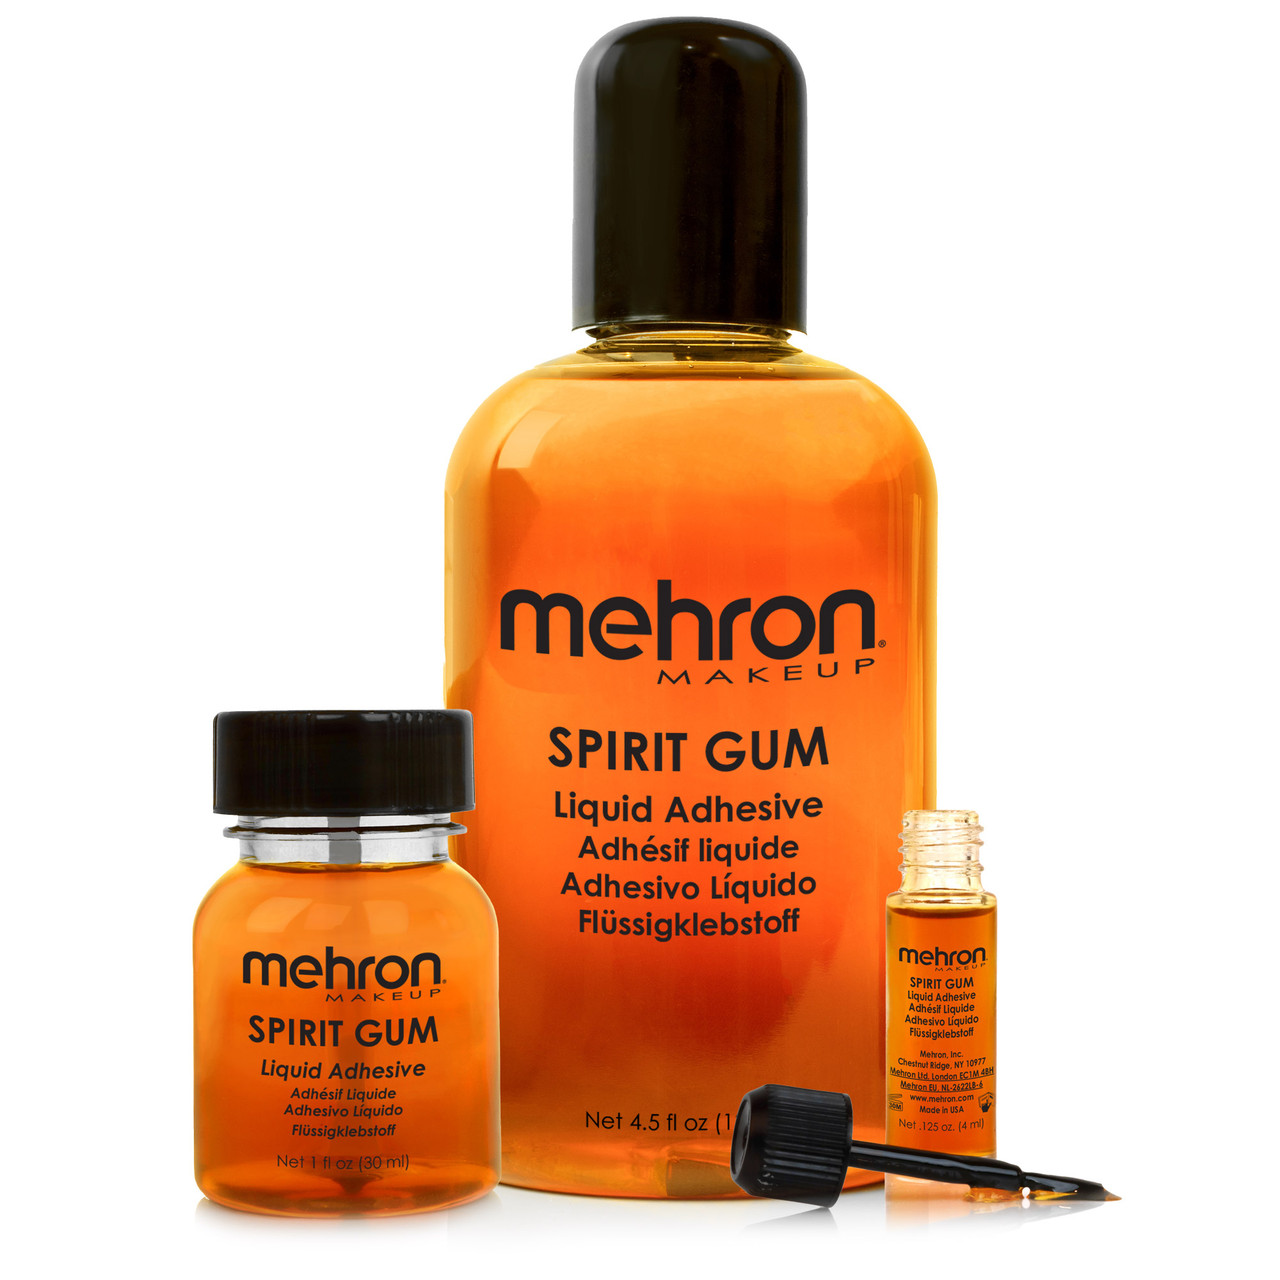 Spirit Gum Remover | Mehron Makeup